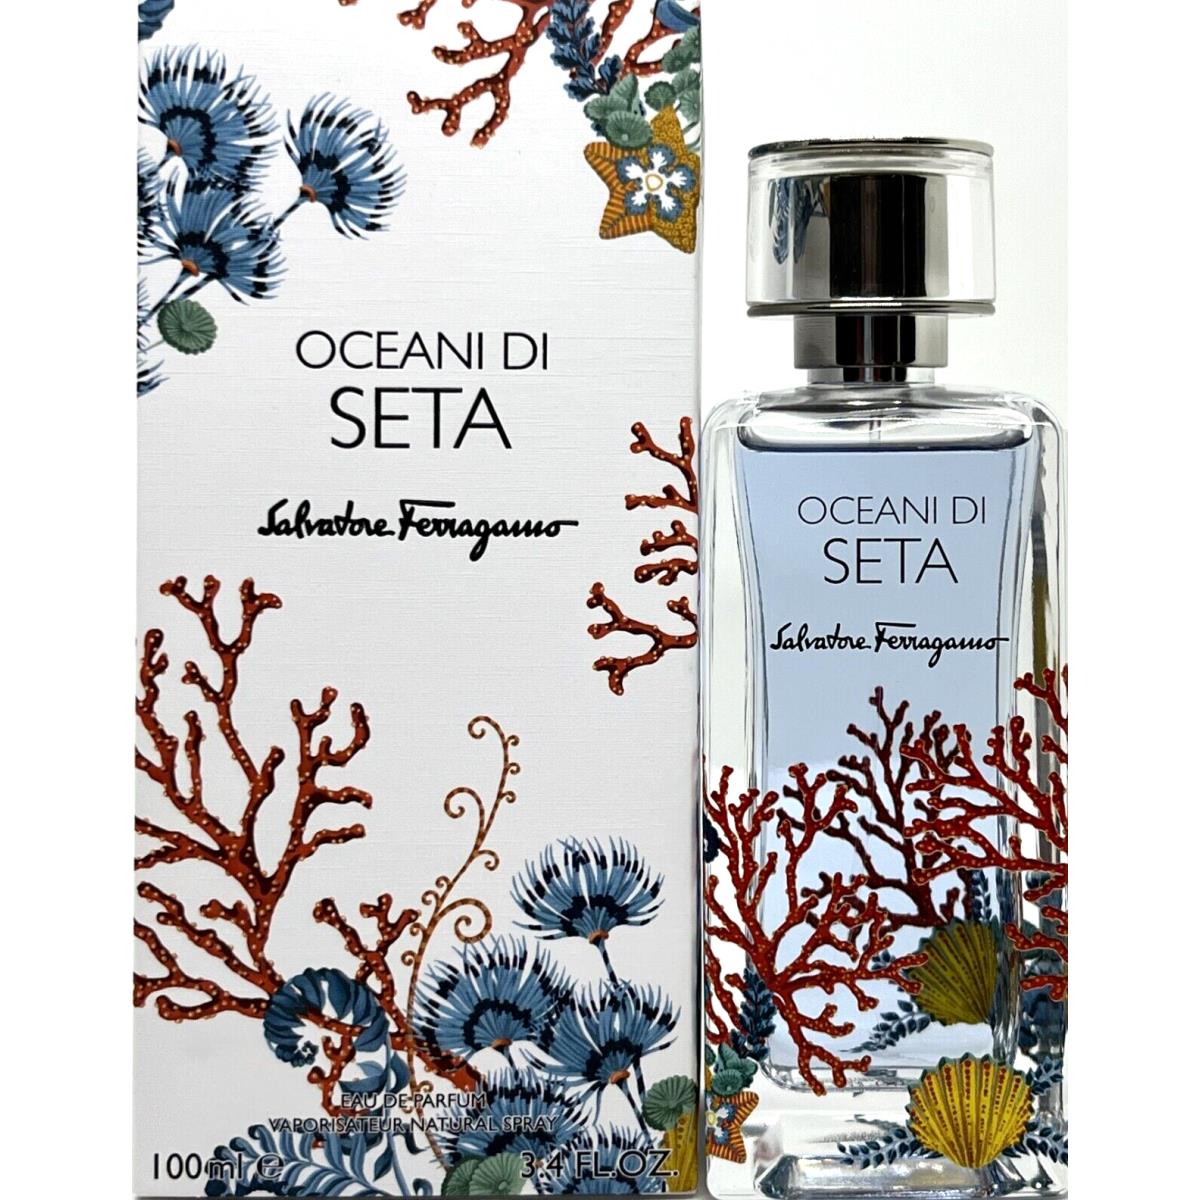 Salvatore Brands Unisex Oceani - | / Fash DI perfume,cologne,fragrance,parfum Oz Seta Spray DE Ferragamo 100 ml Parfum Ferragamo - Eau Salvatore 3.4